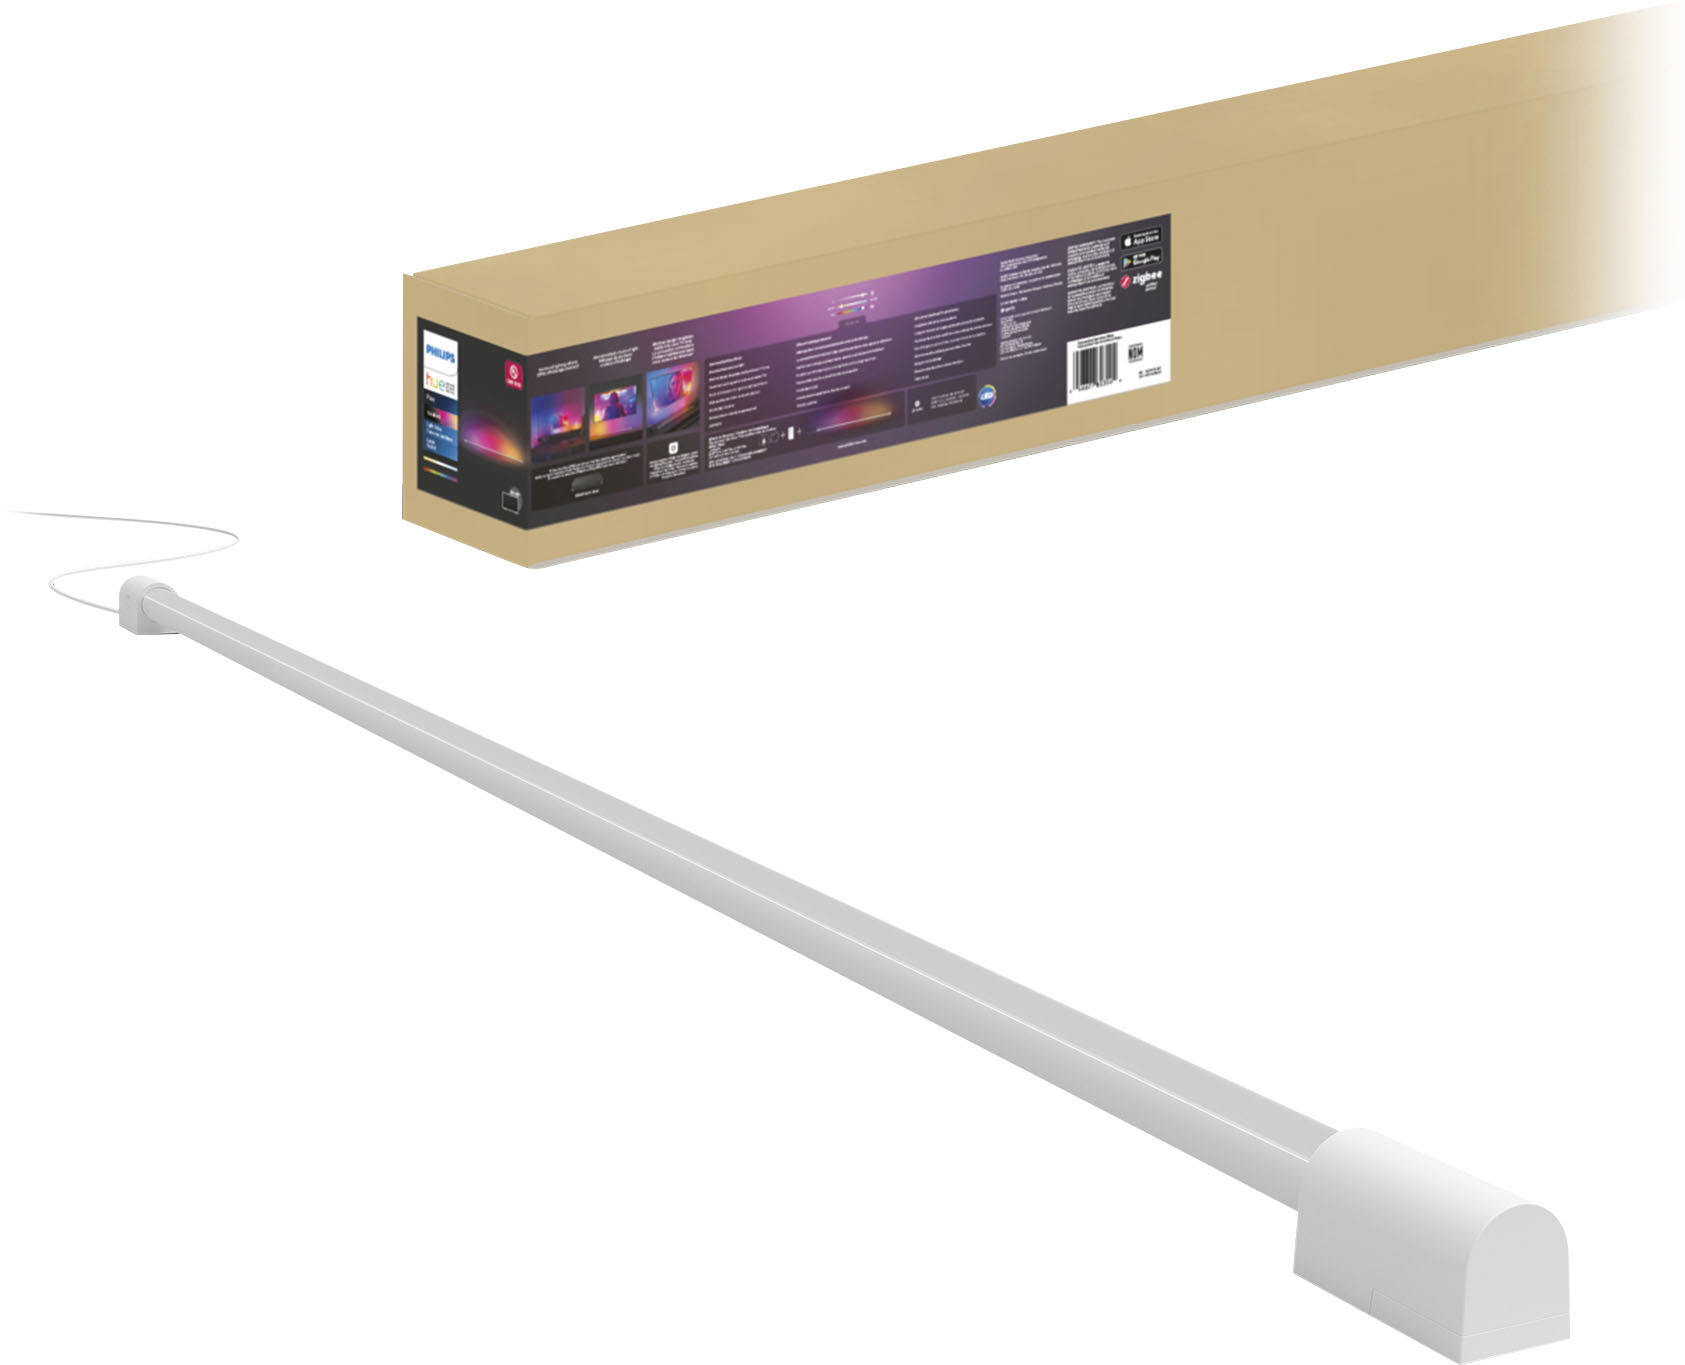 Philips Hue Play Gradient Lightstrip 75 White 560425 - Best Buy